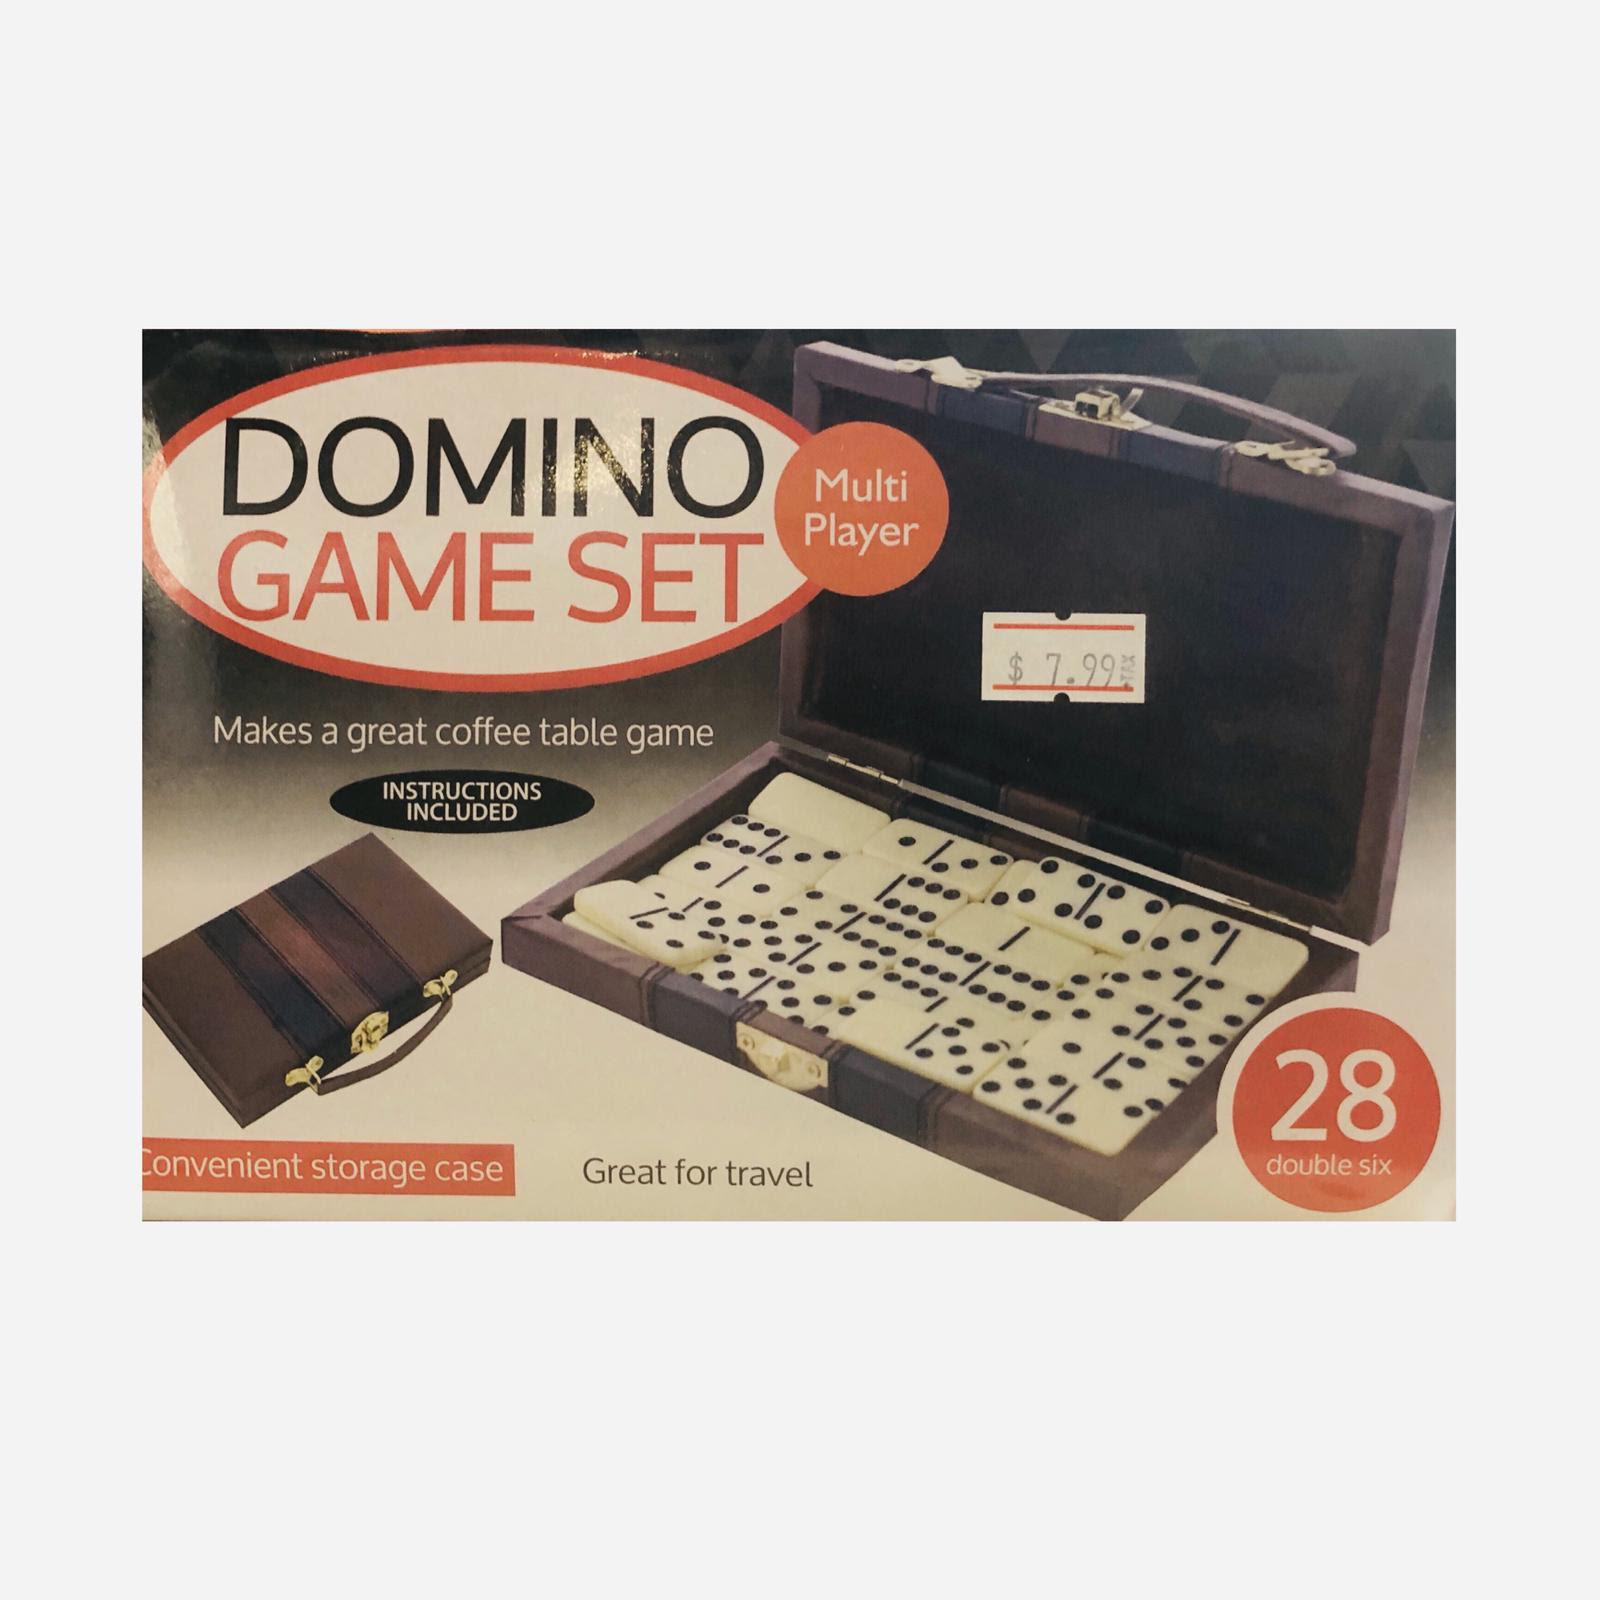 Domino Game Set Anf Toyz